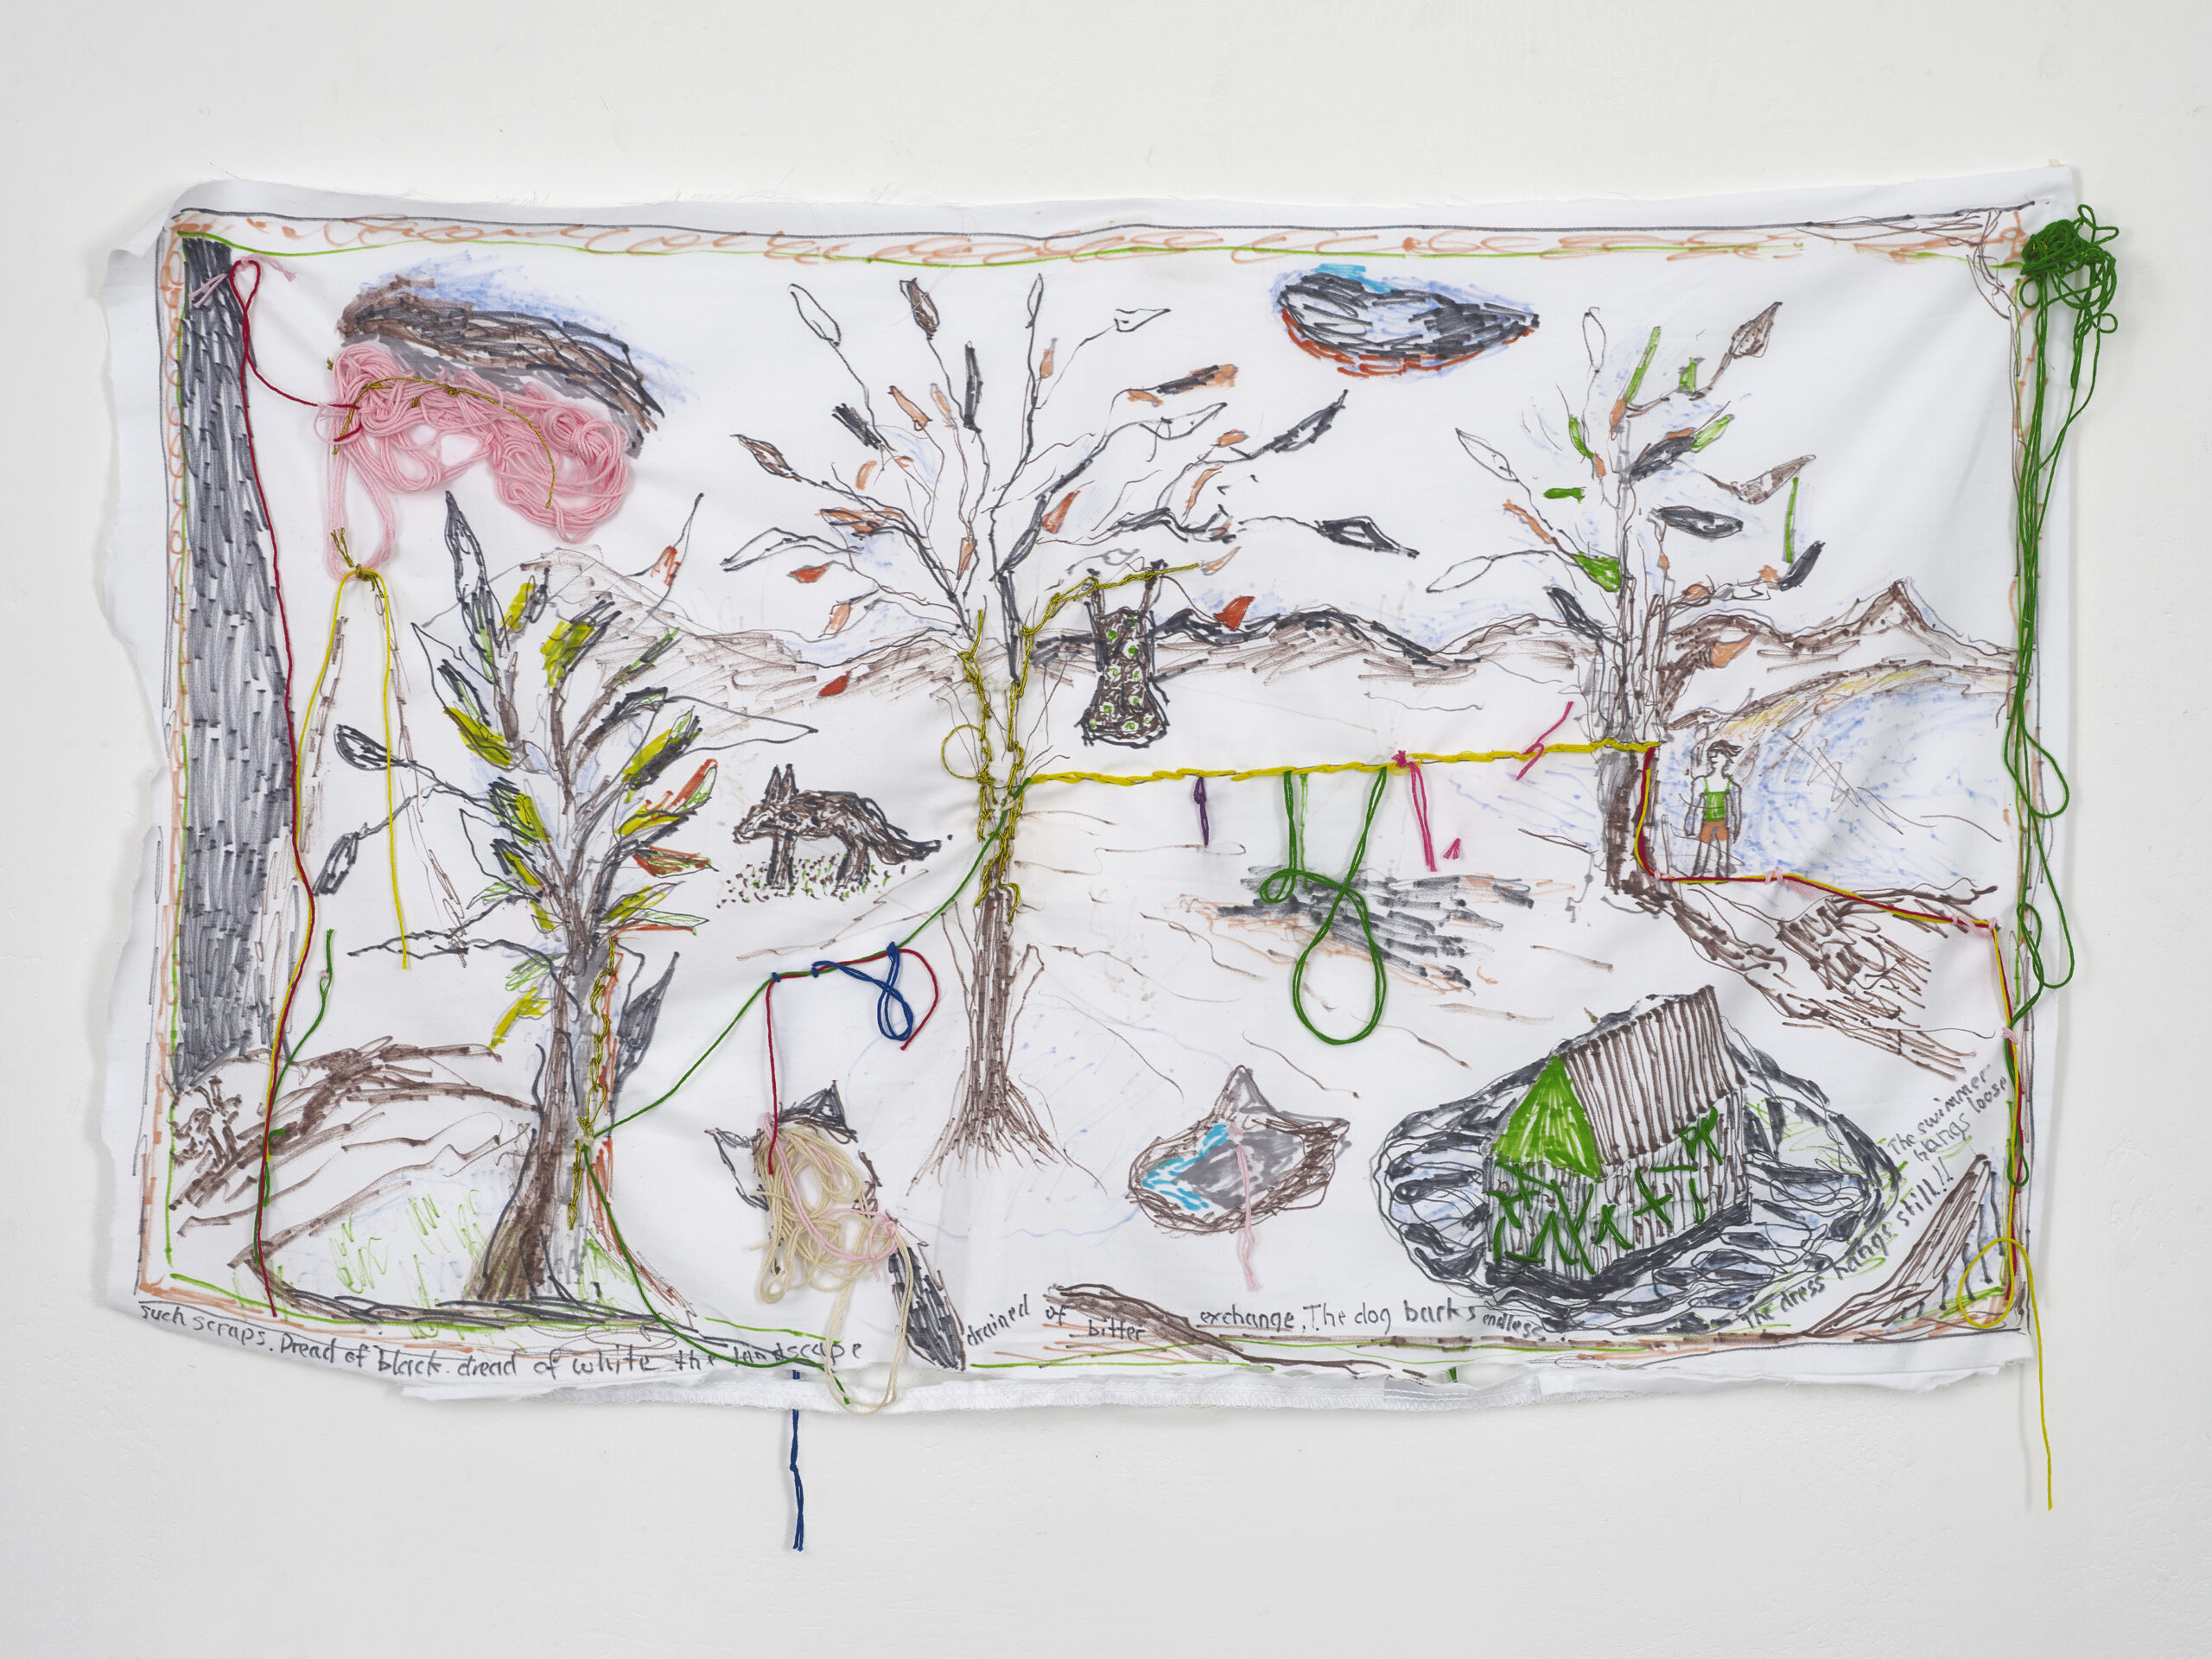 Brian Dawn Chalkley The dog barks endless (2020) Pencil, felt tip and thread on cotton pillow case, 75 cm x 45 cm.